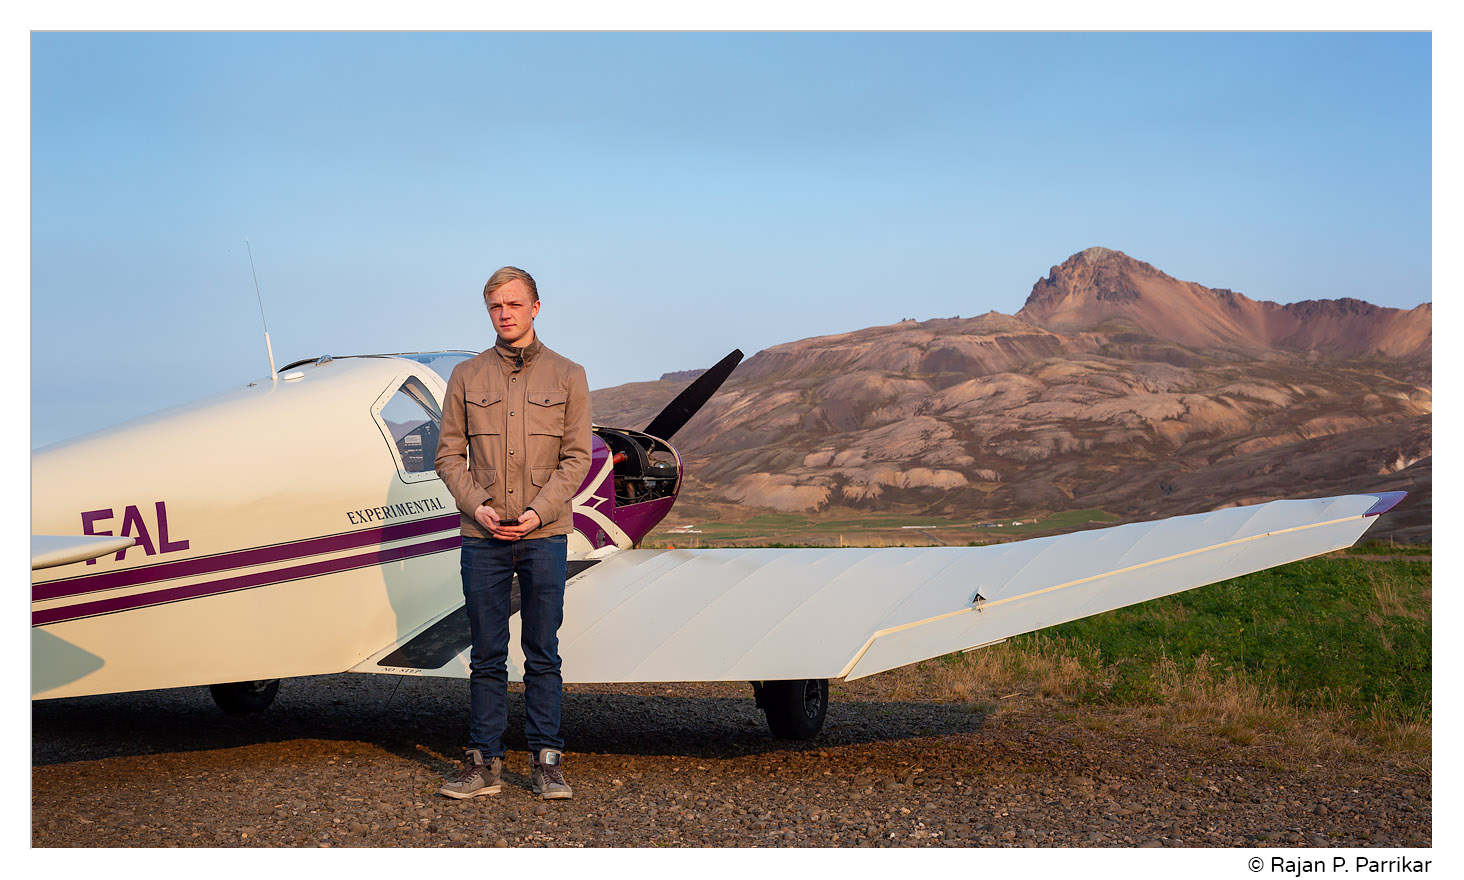 Kolbeinn Hilmarsson of Egilsstaðir, Iceland, with his Falconar plane